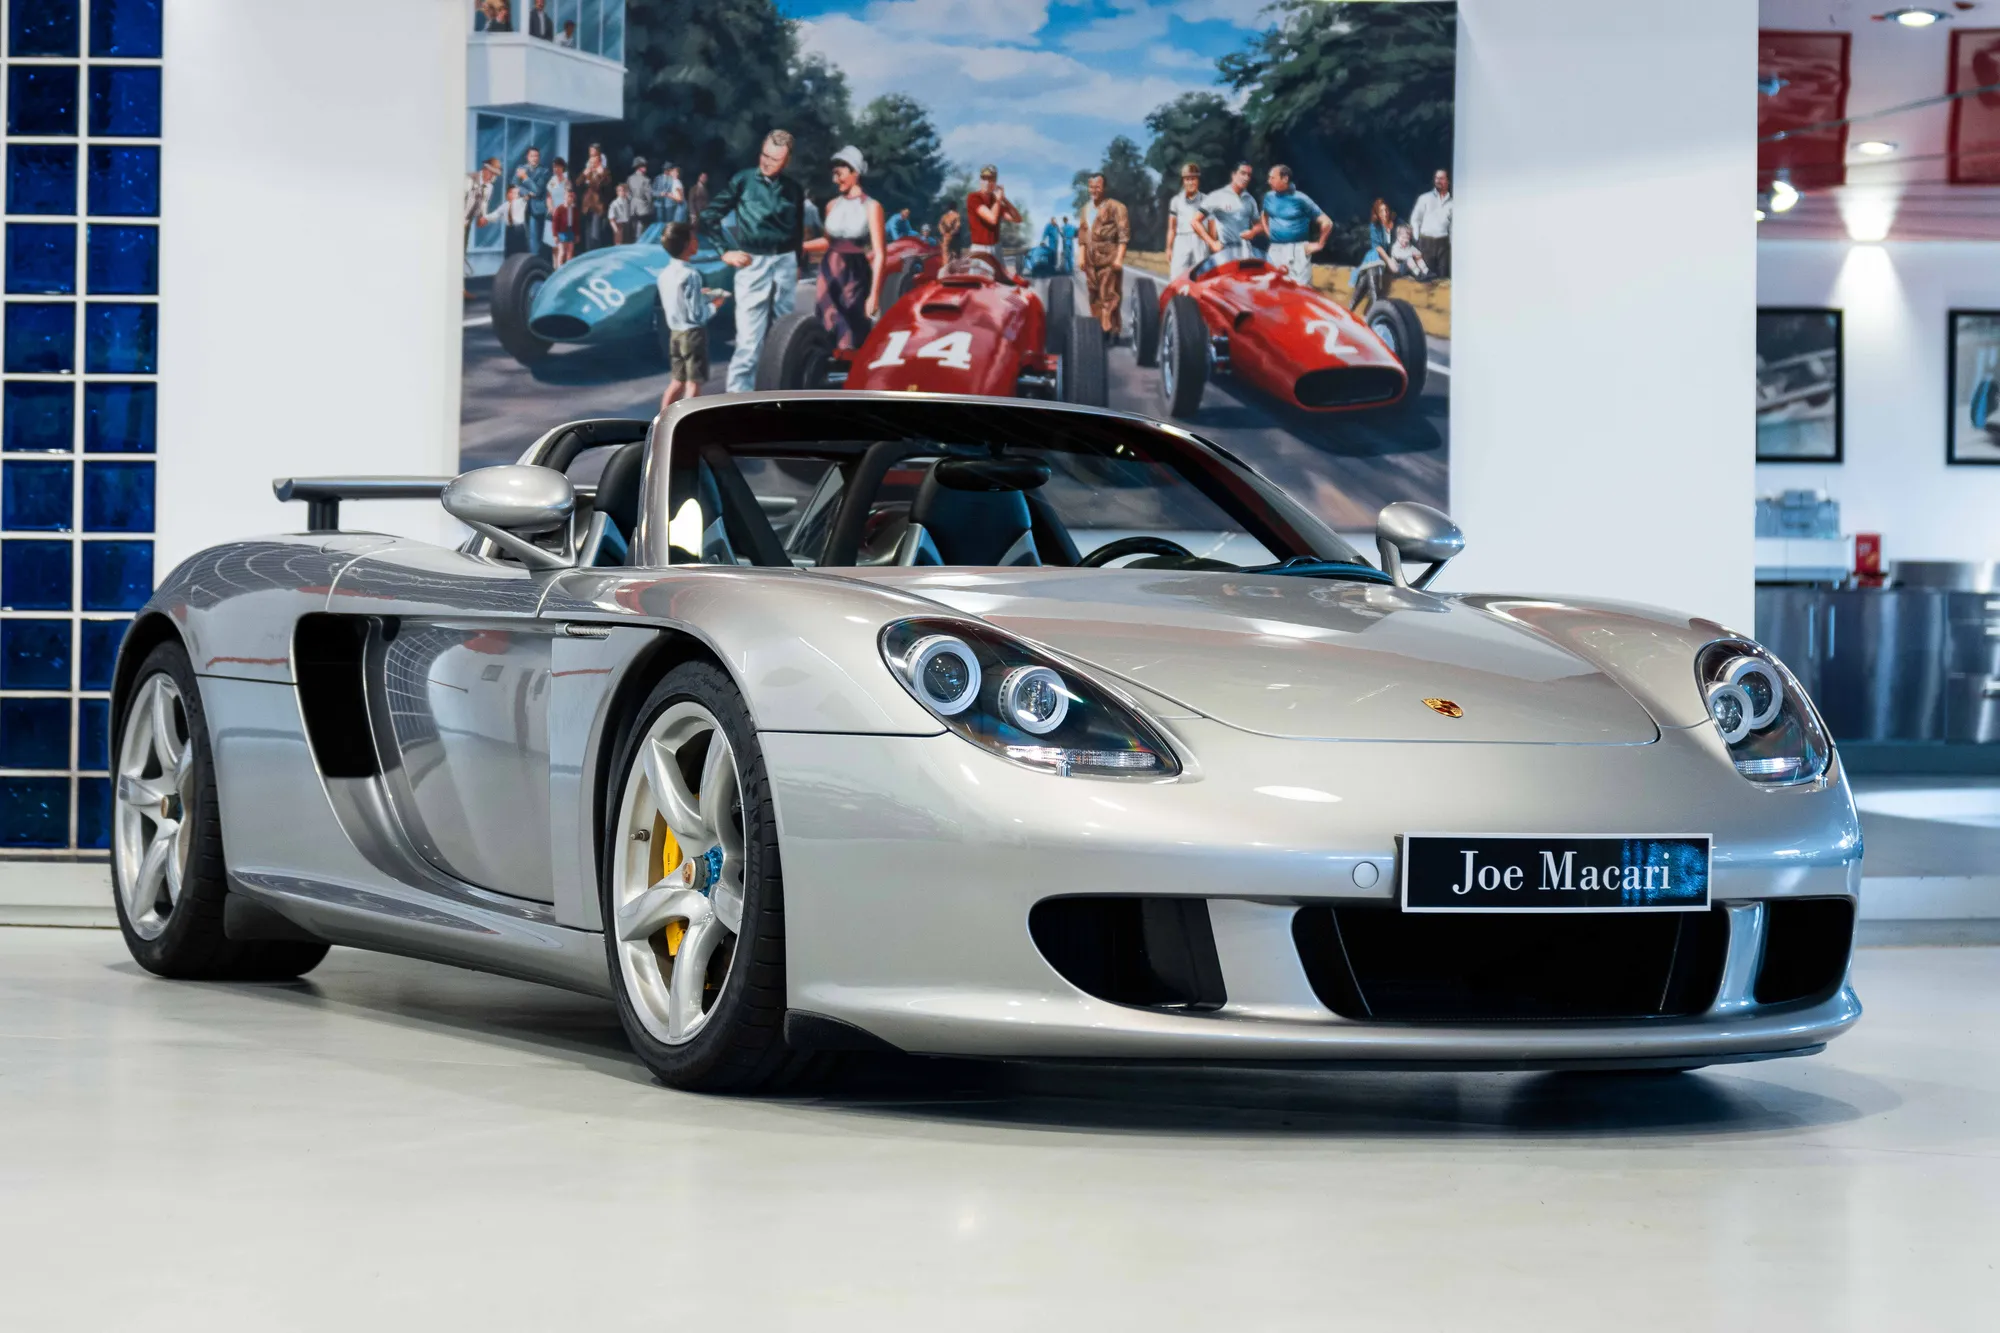 Porsche Carrera GT for Sale | Joe Macari